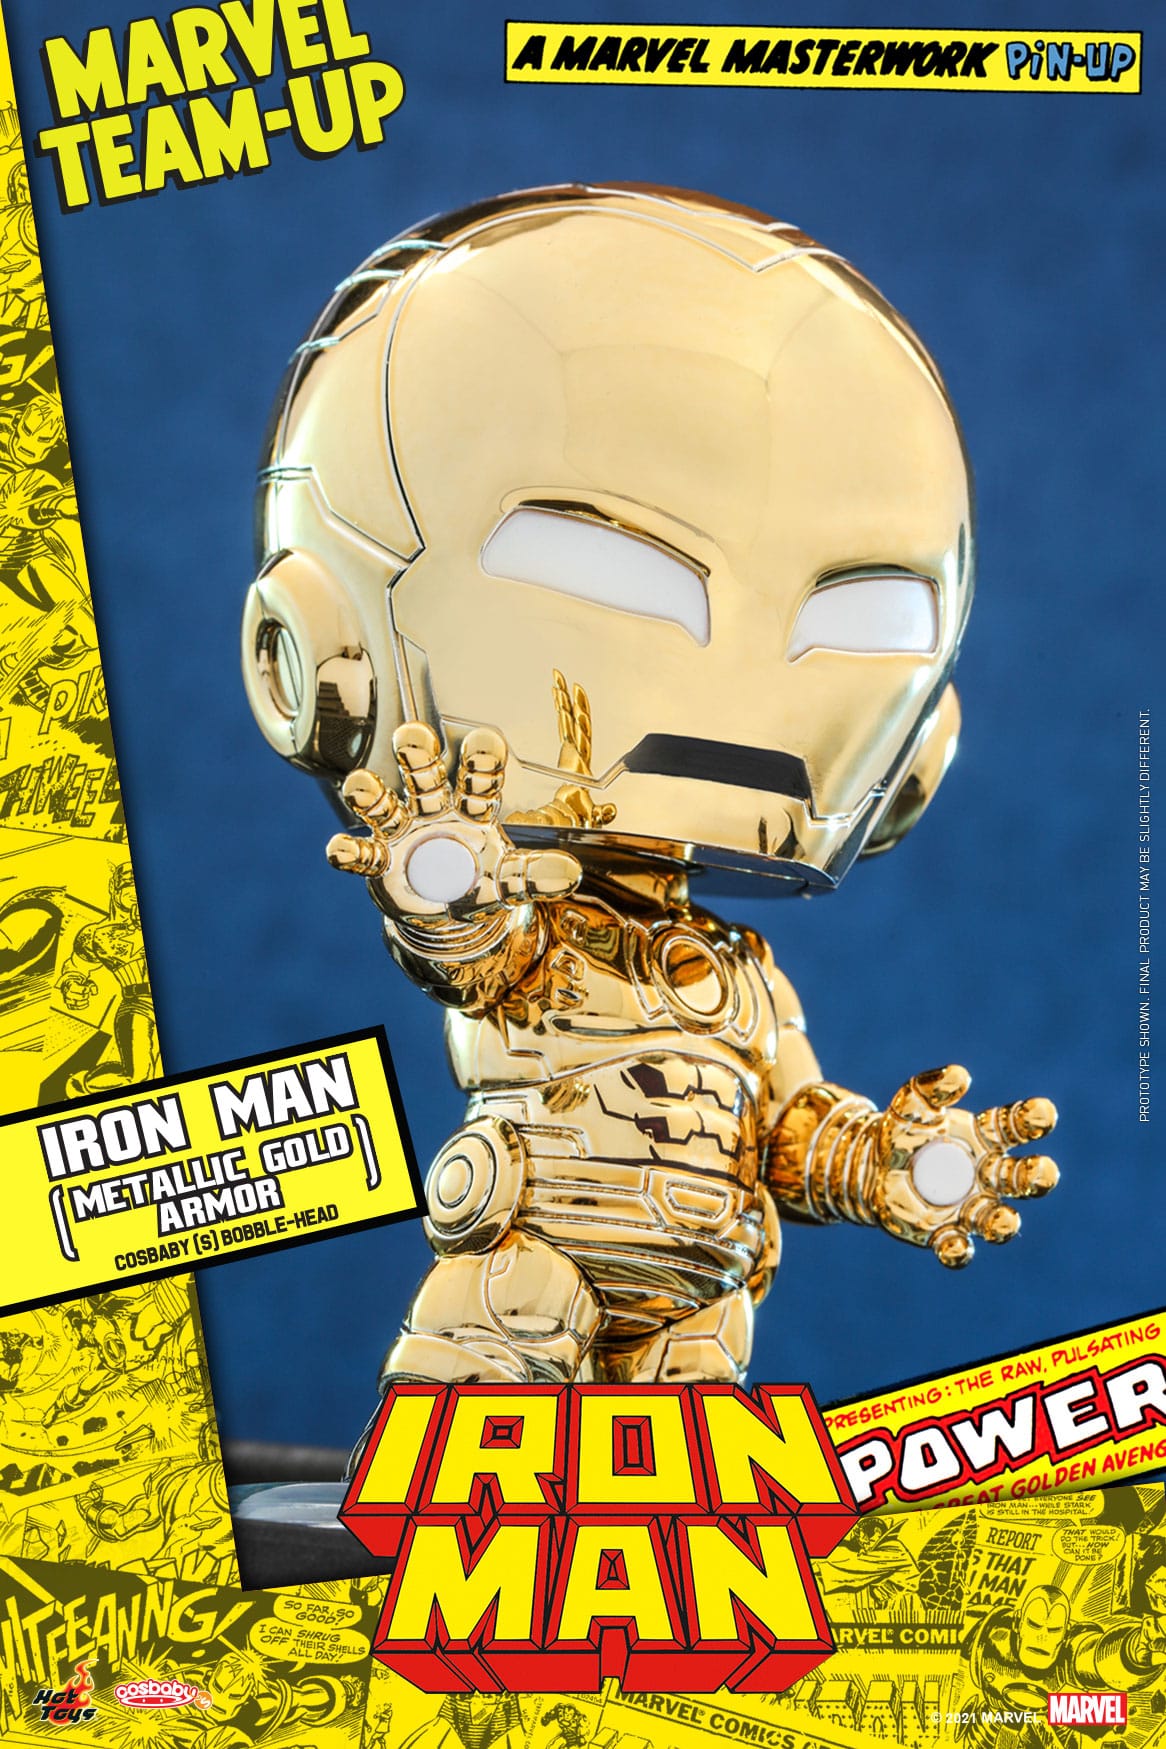 Iron Man (Metallic Gold Armor) Cosbaby